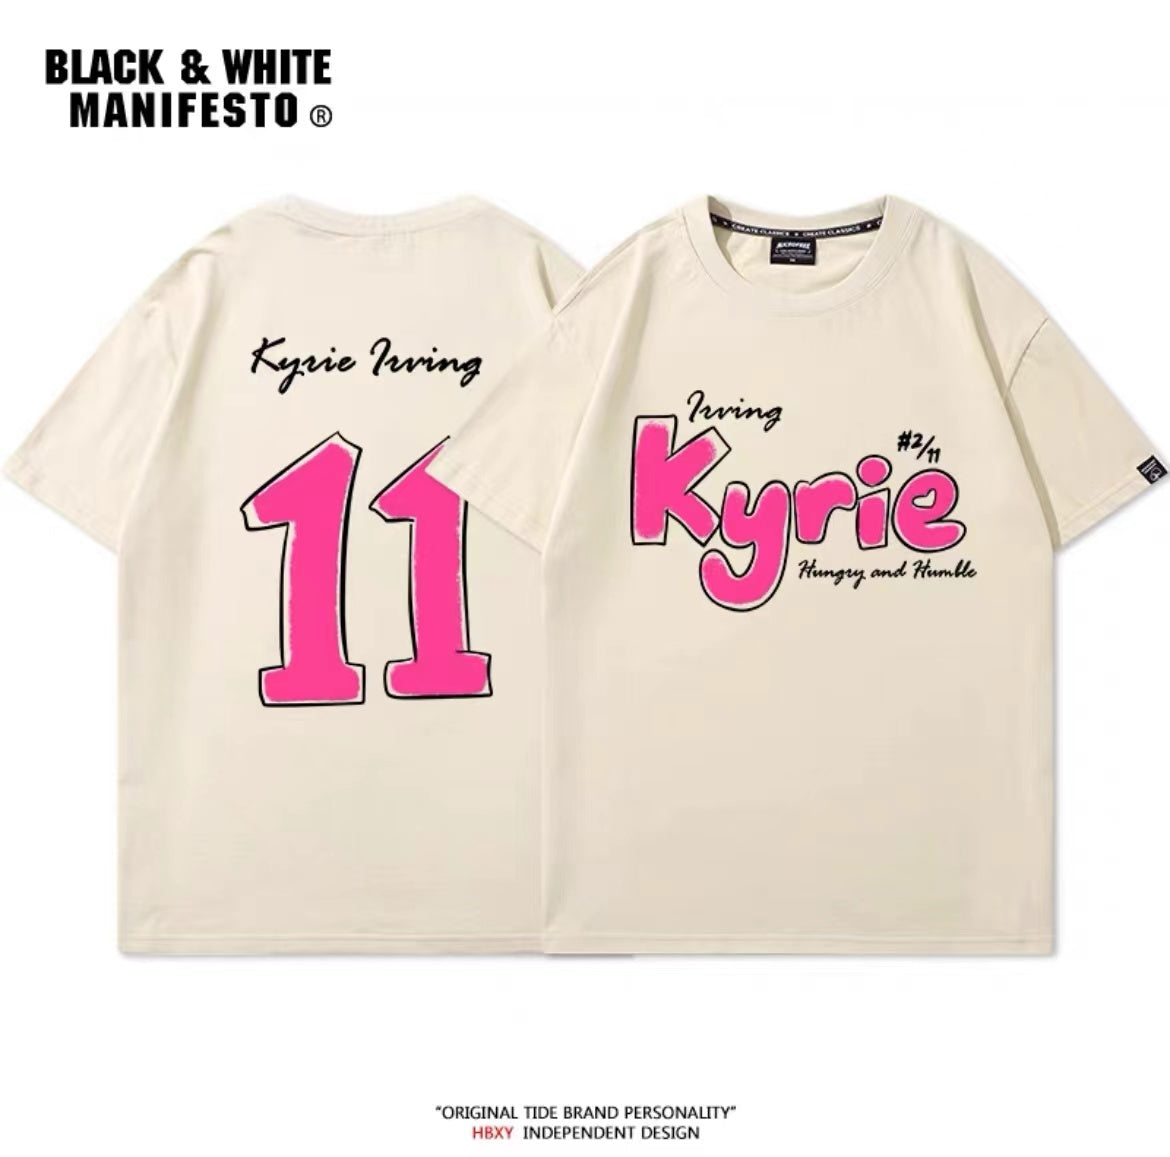 Kyrie Irving Graffiti Print T-Shirt